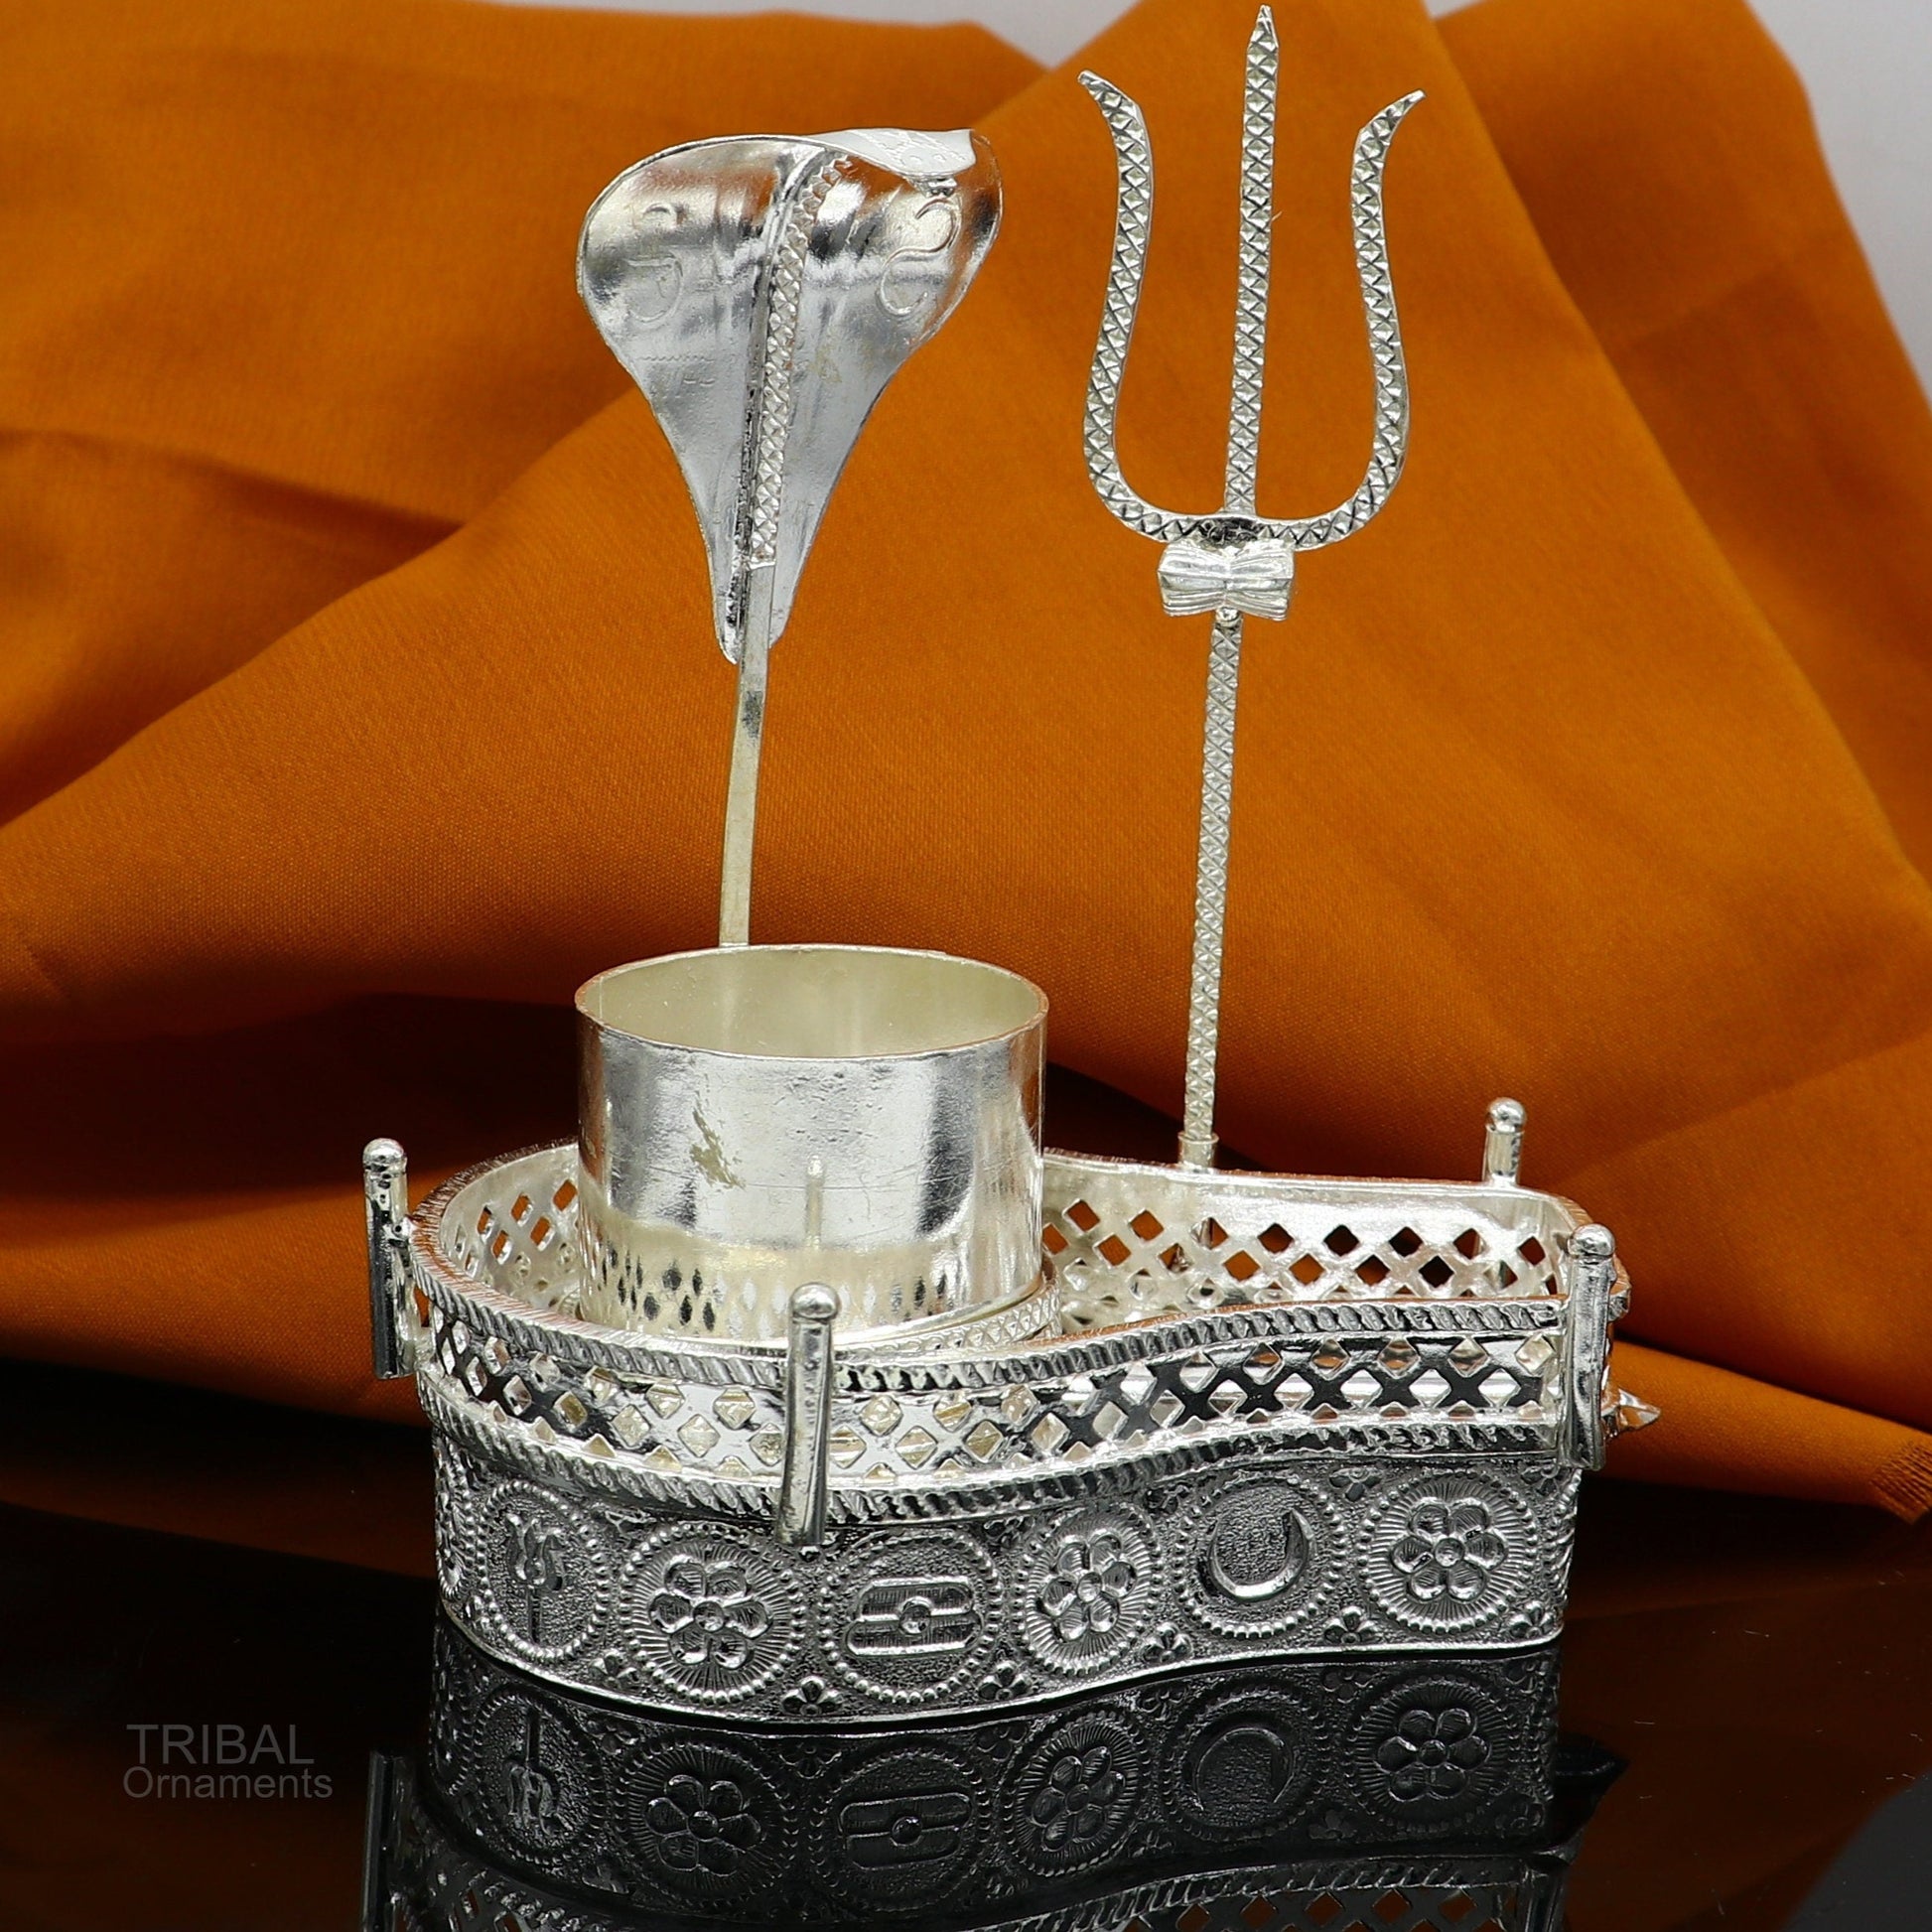 925 sterling silver lord shiva Mahakal lingam stand/jalheri, use for put/hold shiva lingam for puja, divine shiva puja articles  su604 - TRIBAL ORNAMENTS